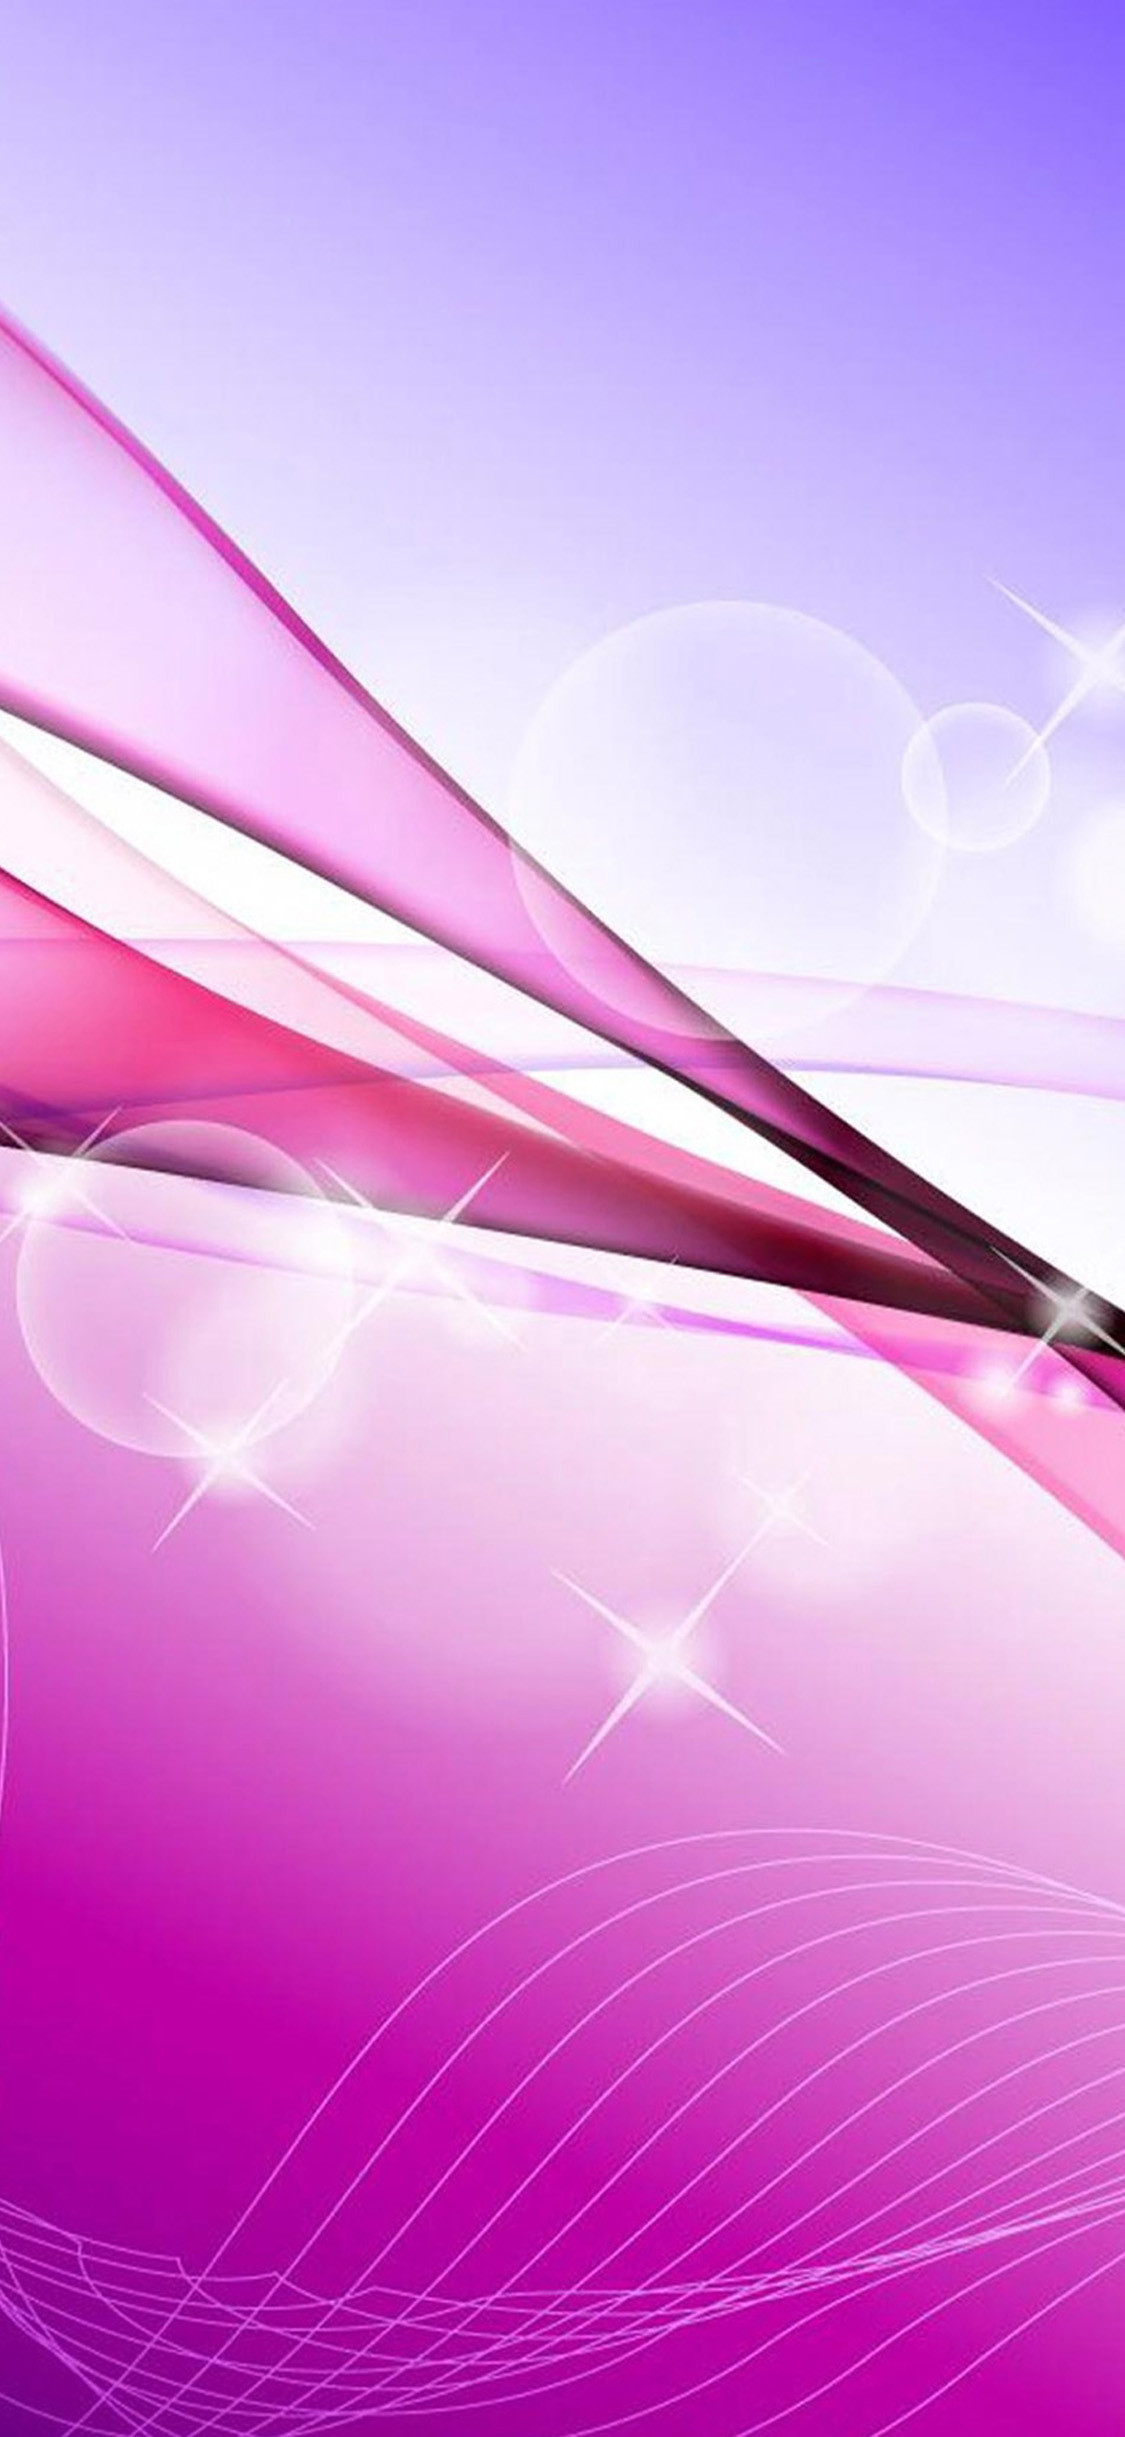 1125x2437 Purple colorful iPhone X Wallpaper